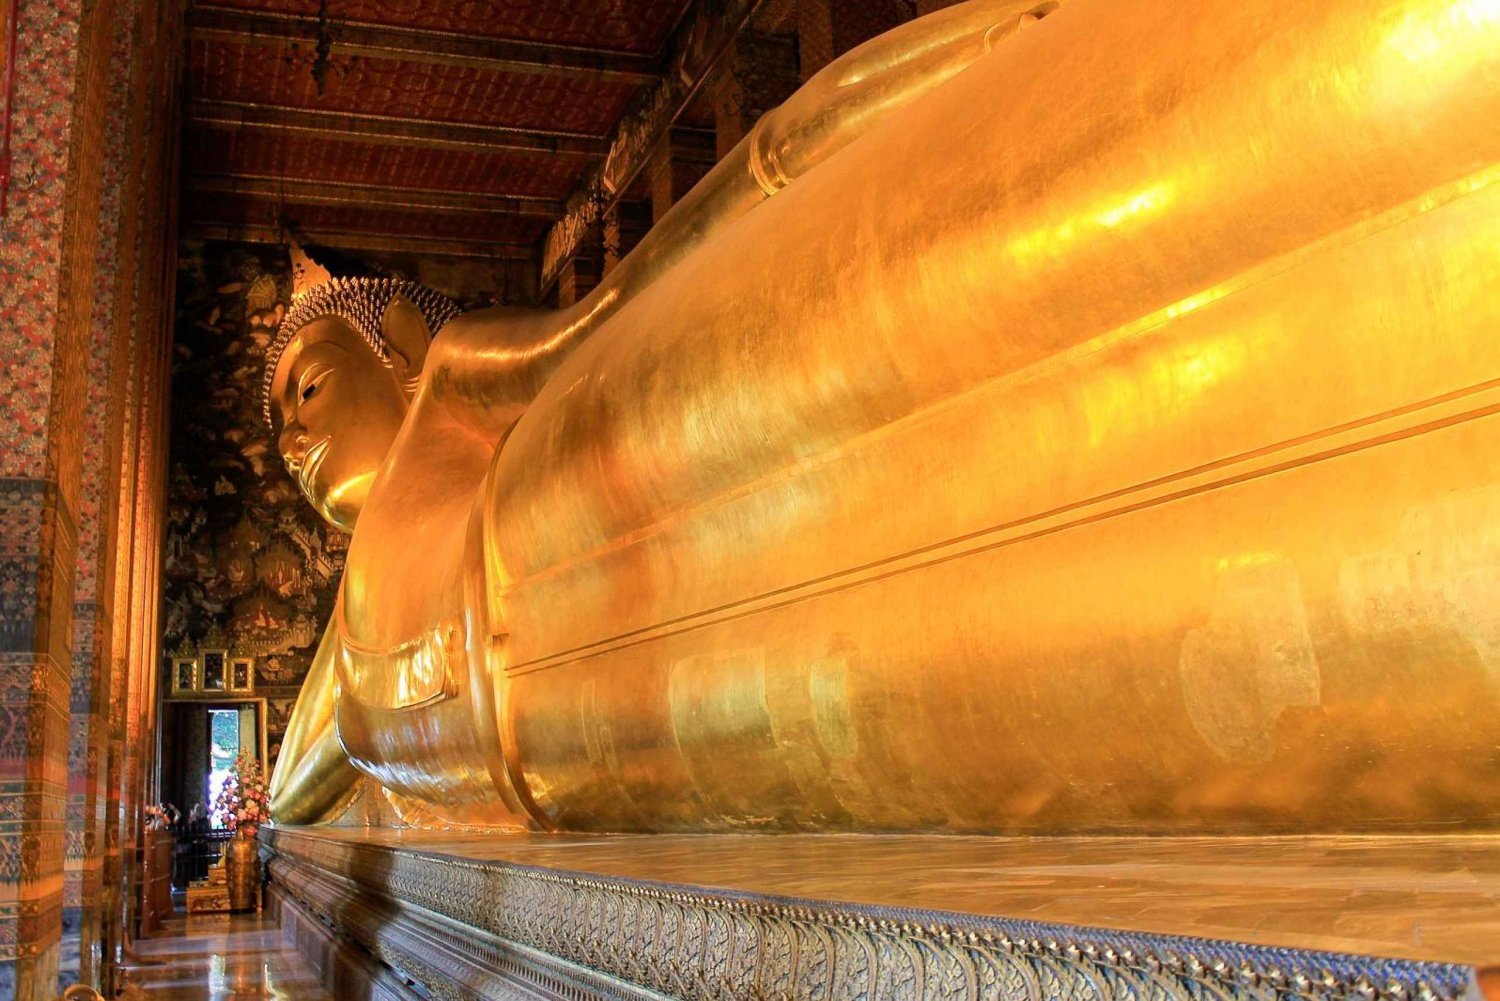 Bangkok: Wielki Pałac Królewski, Wat Pho i Wat Arun